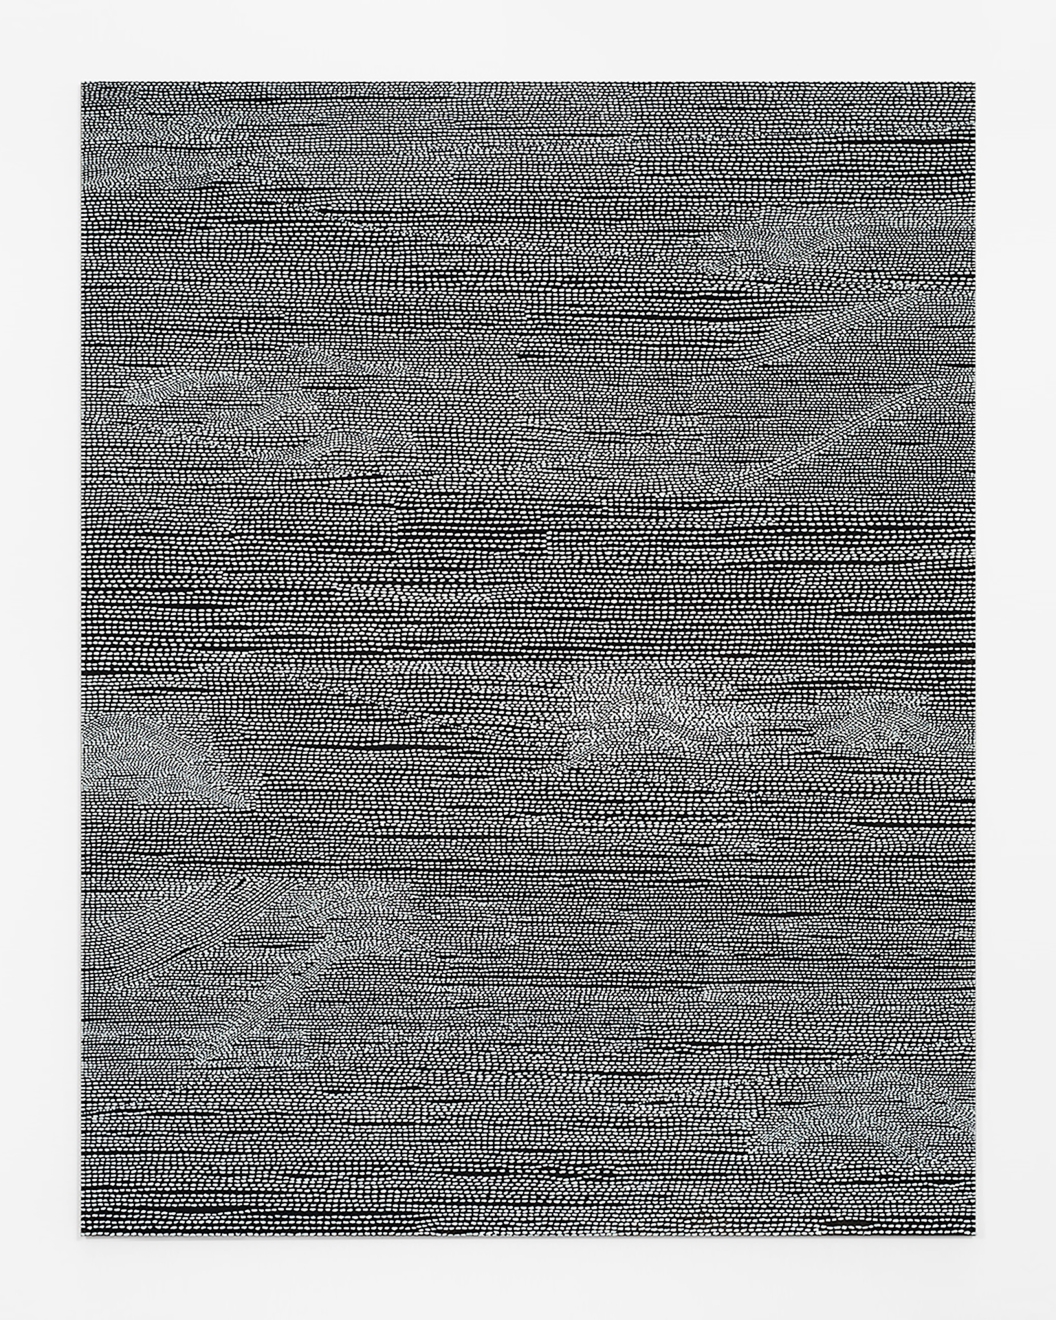 Jennifer Guidi Untitled (Field #11 Black and White), 2014